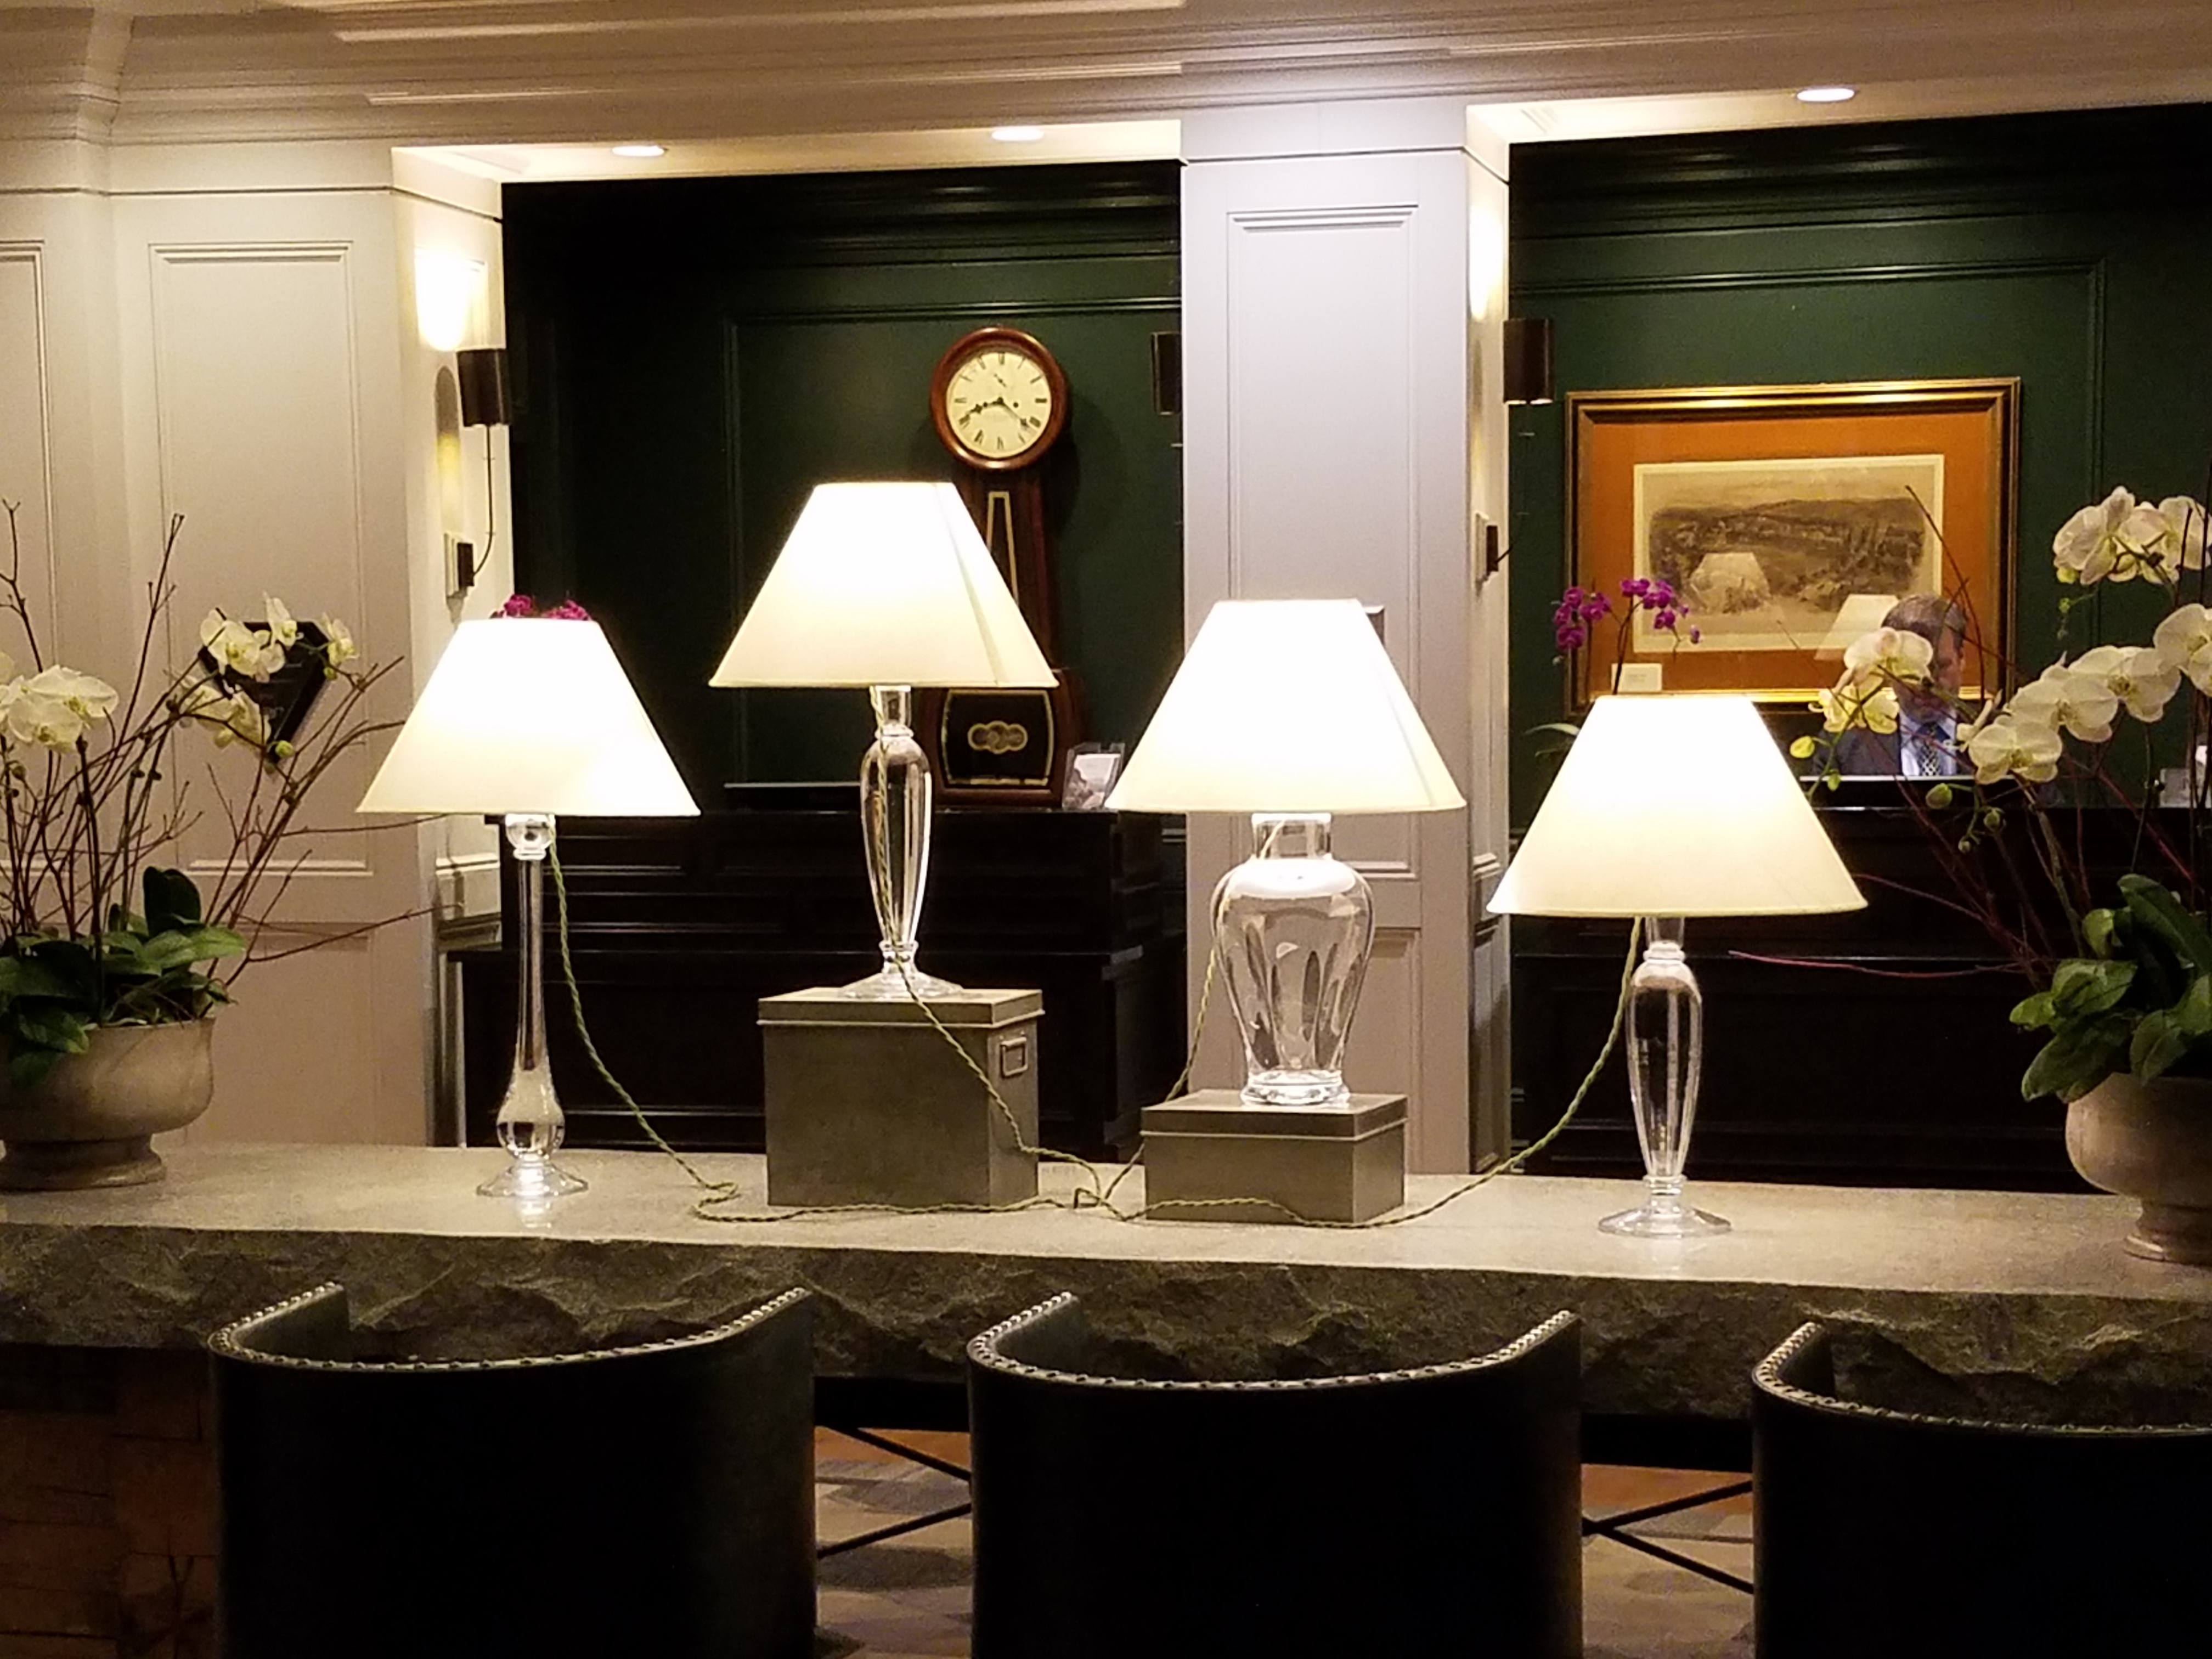 Hanover Inn Lobby Lamps